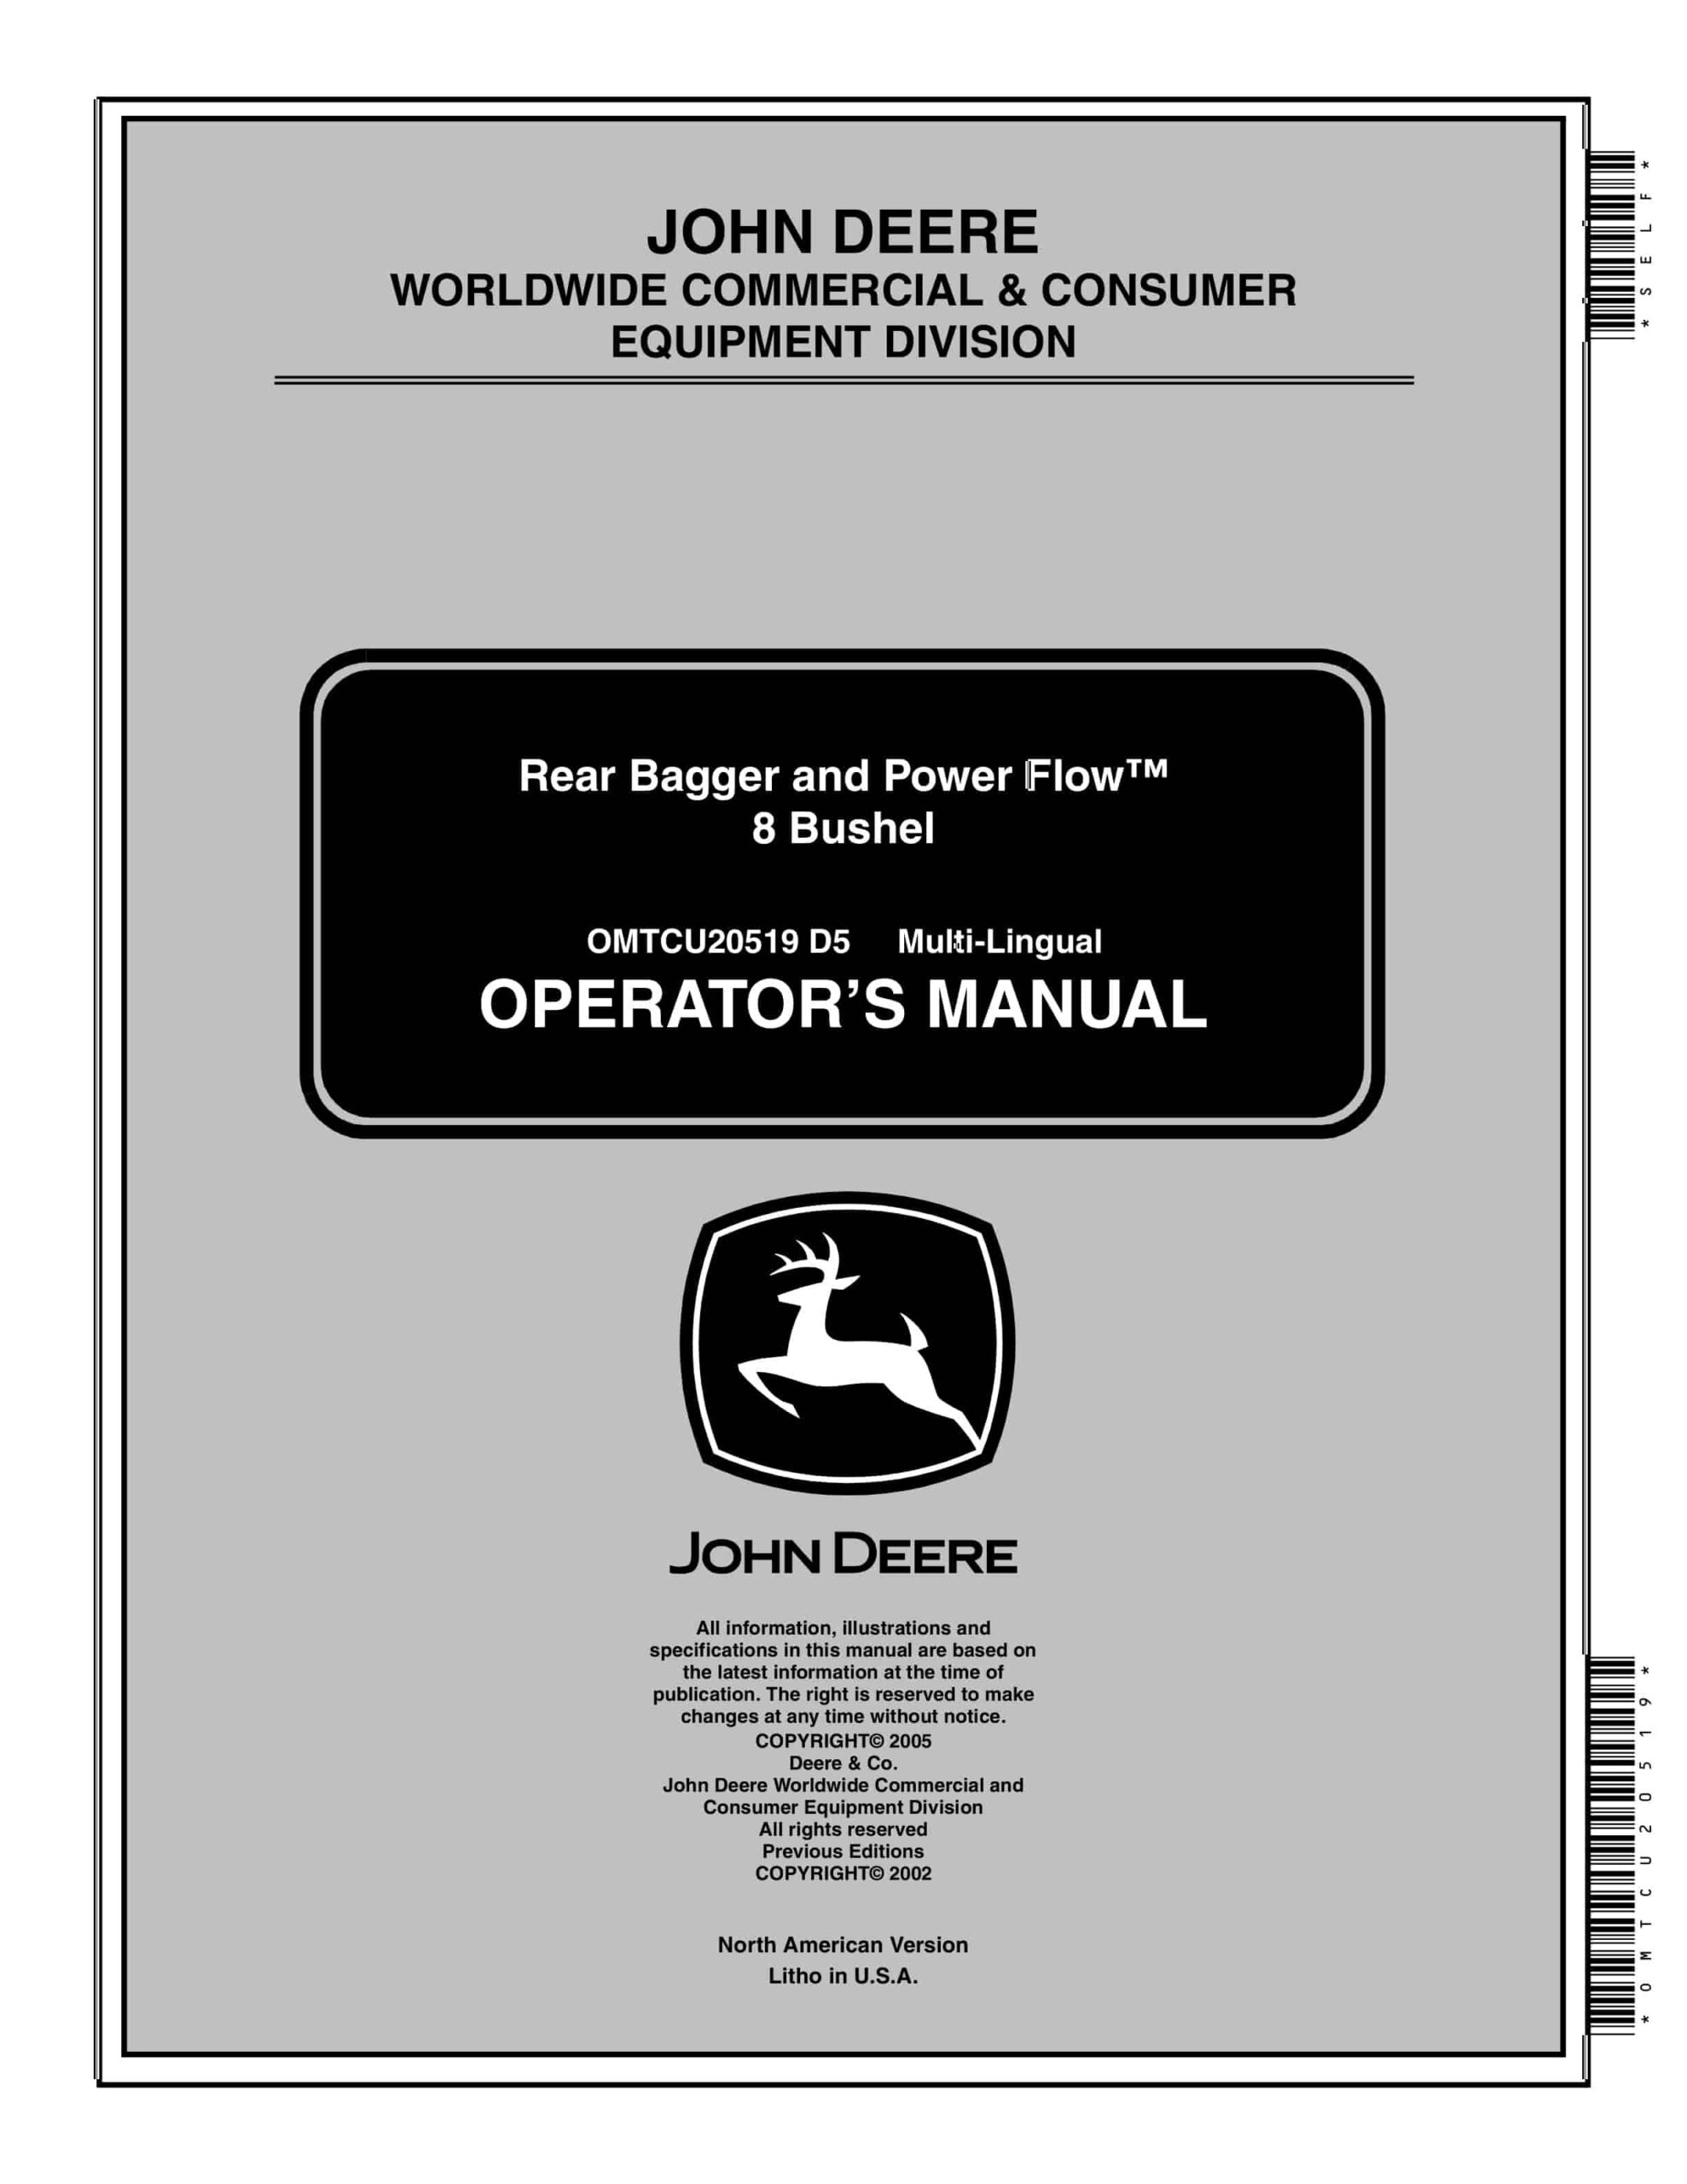 John Deere 8 Bushel Rear Bagger and Power Flow Operator Manual OMTCU20519-1